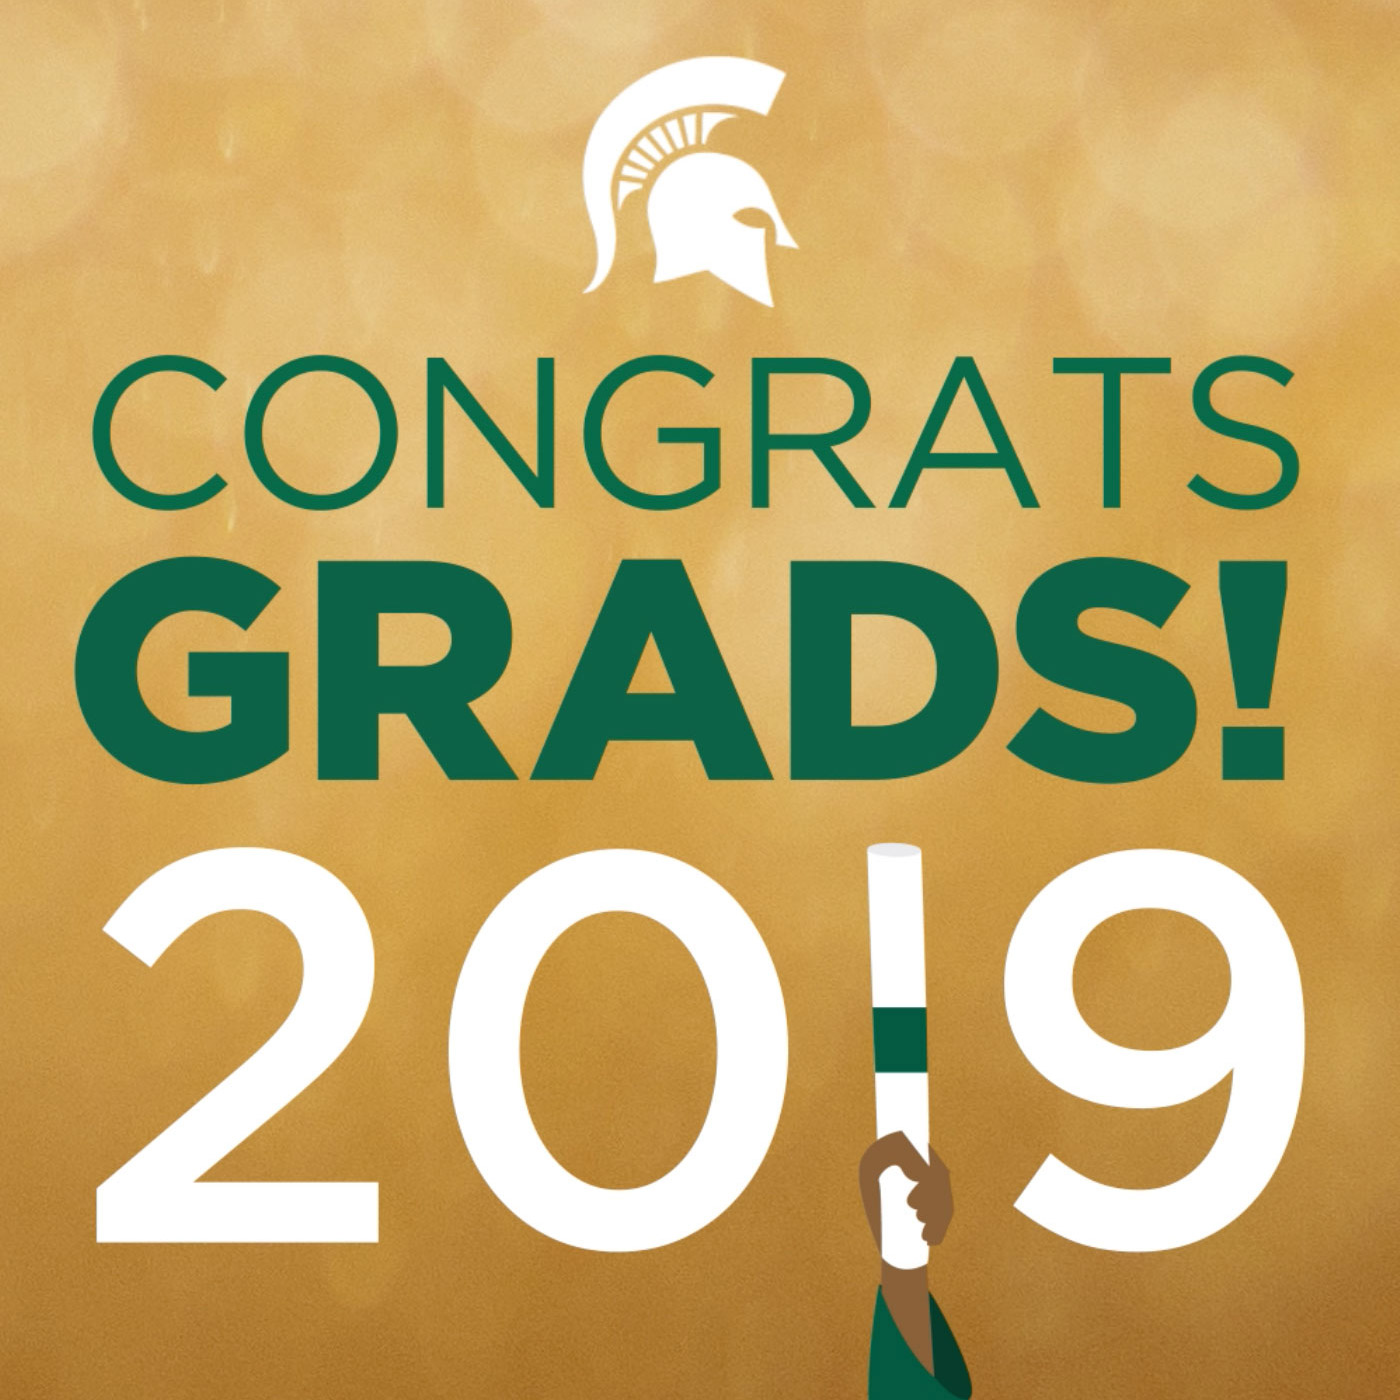 Graduation graphic reading "Congrats Grads! 2019"